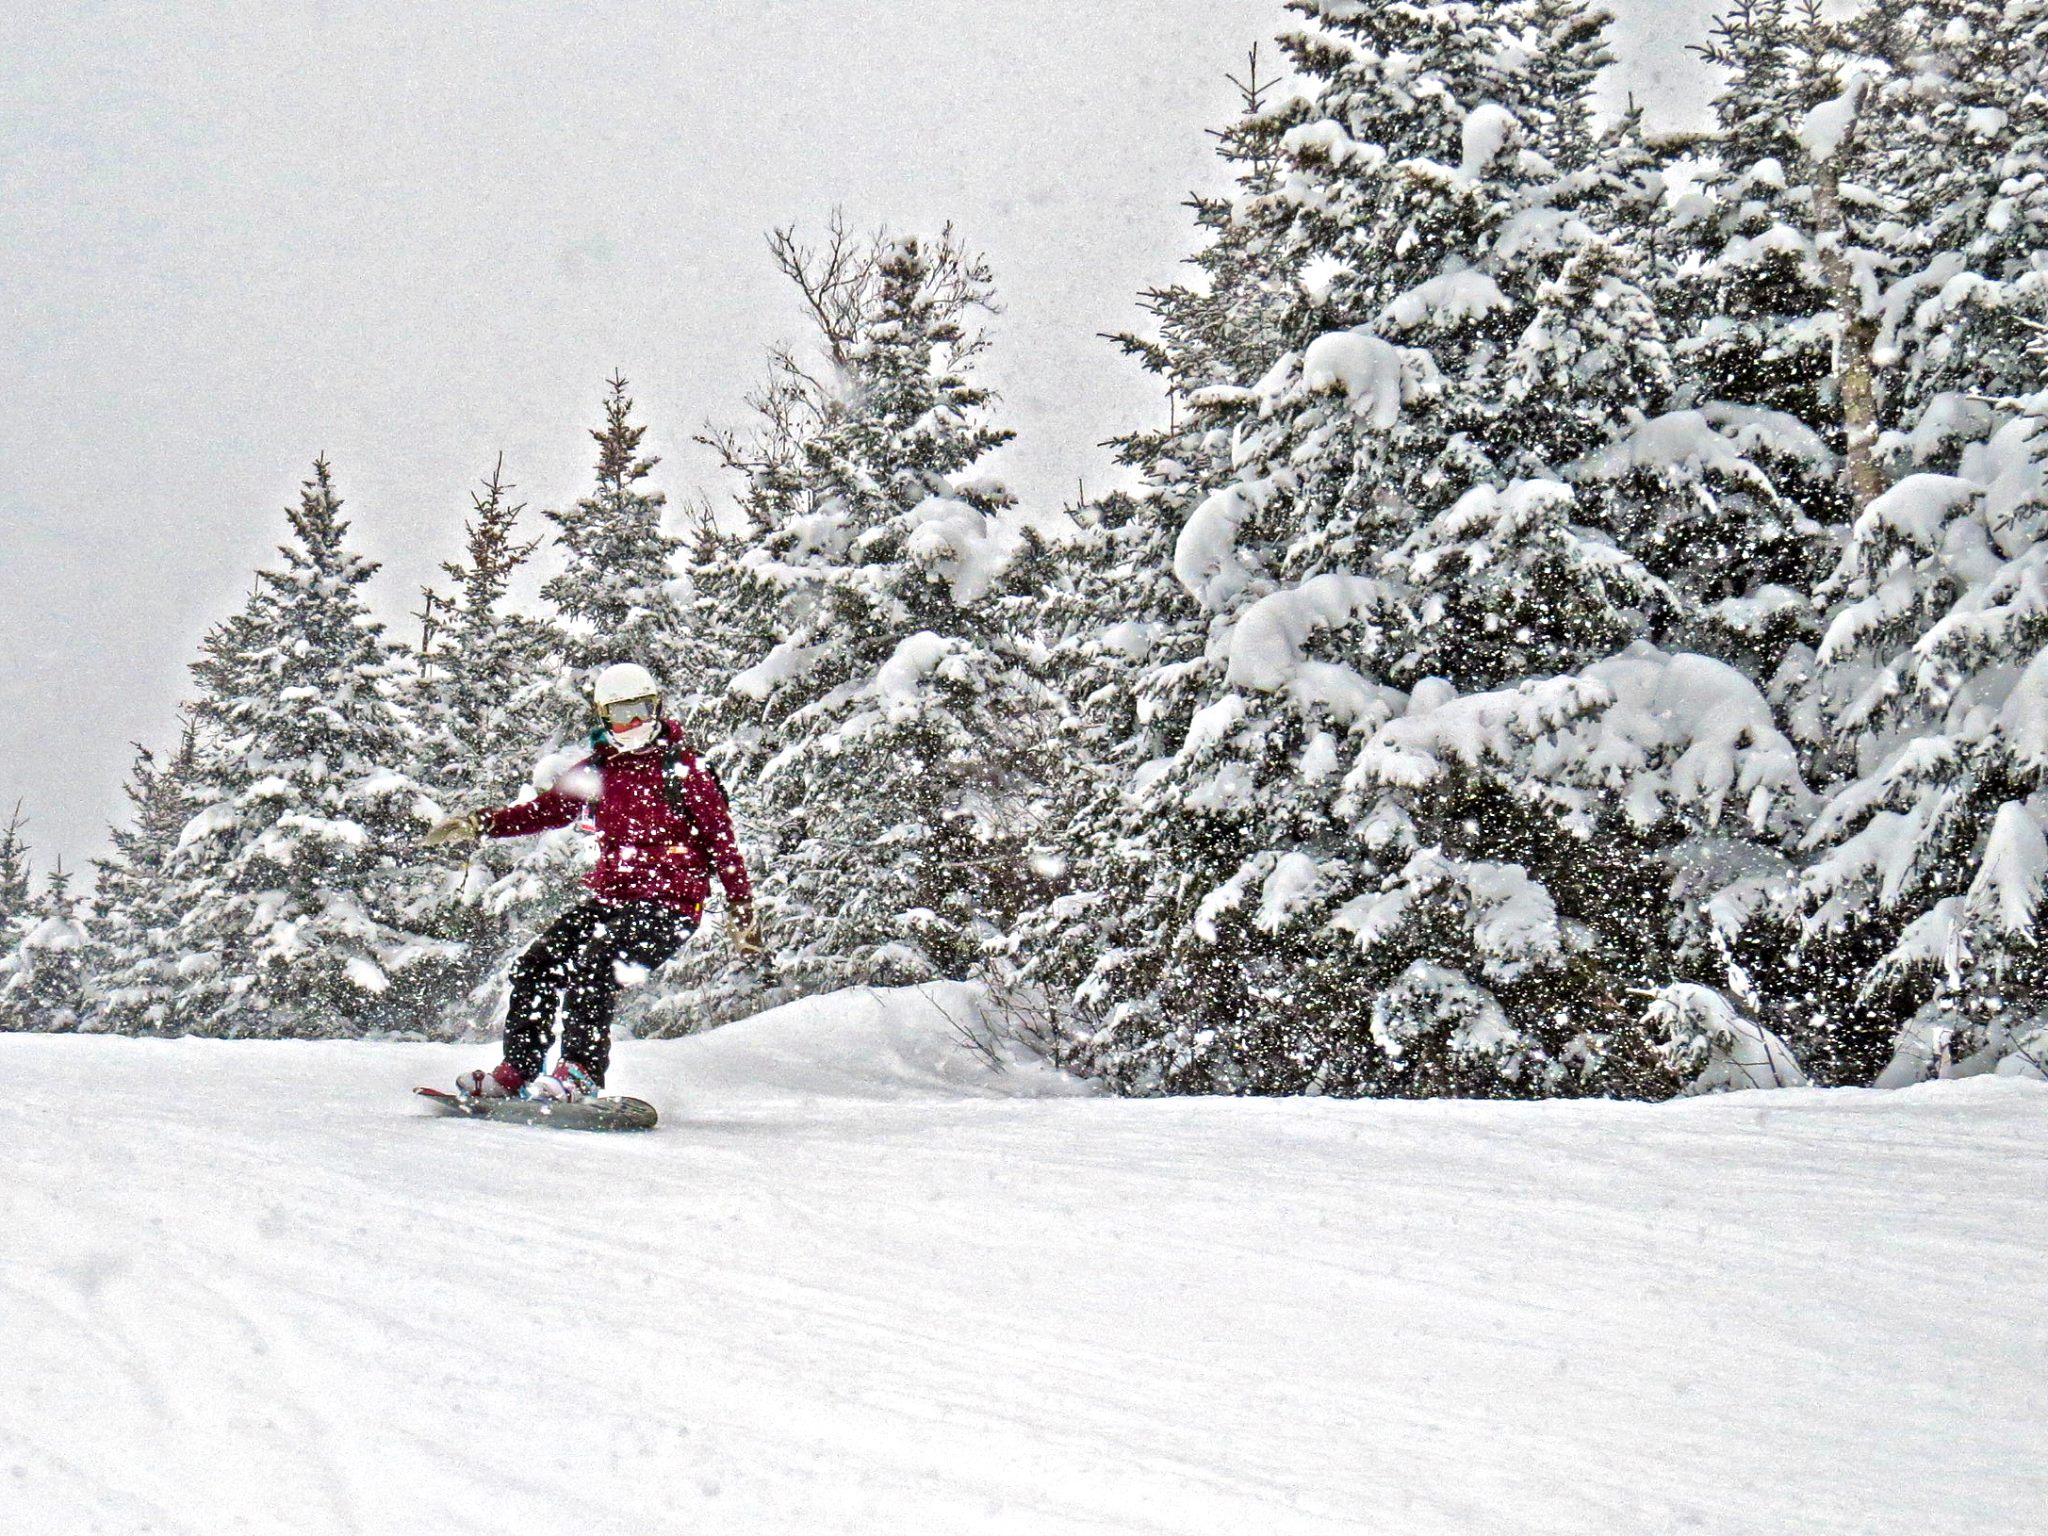 NH_Grand_event_Bretton-Woods-Snowboarding